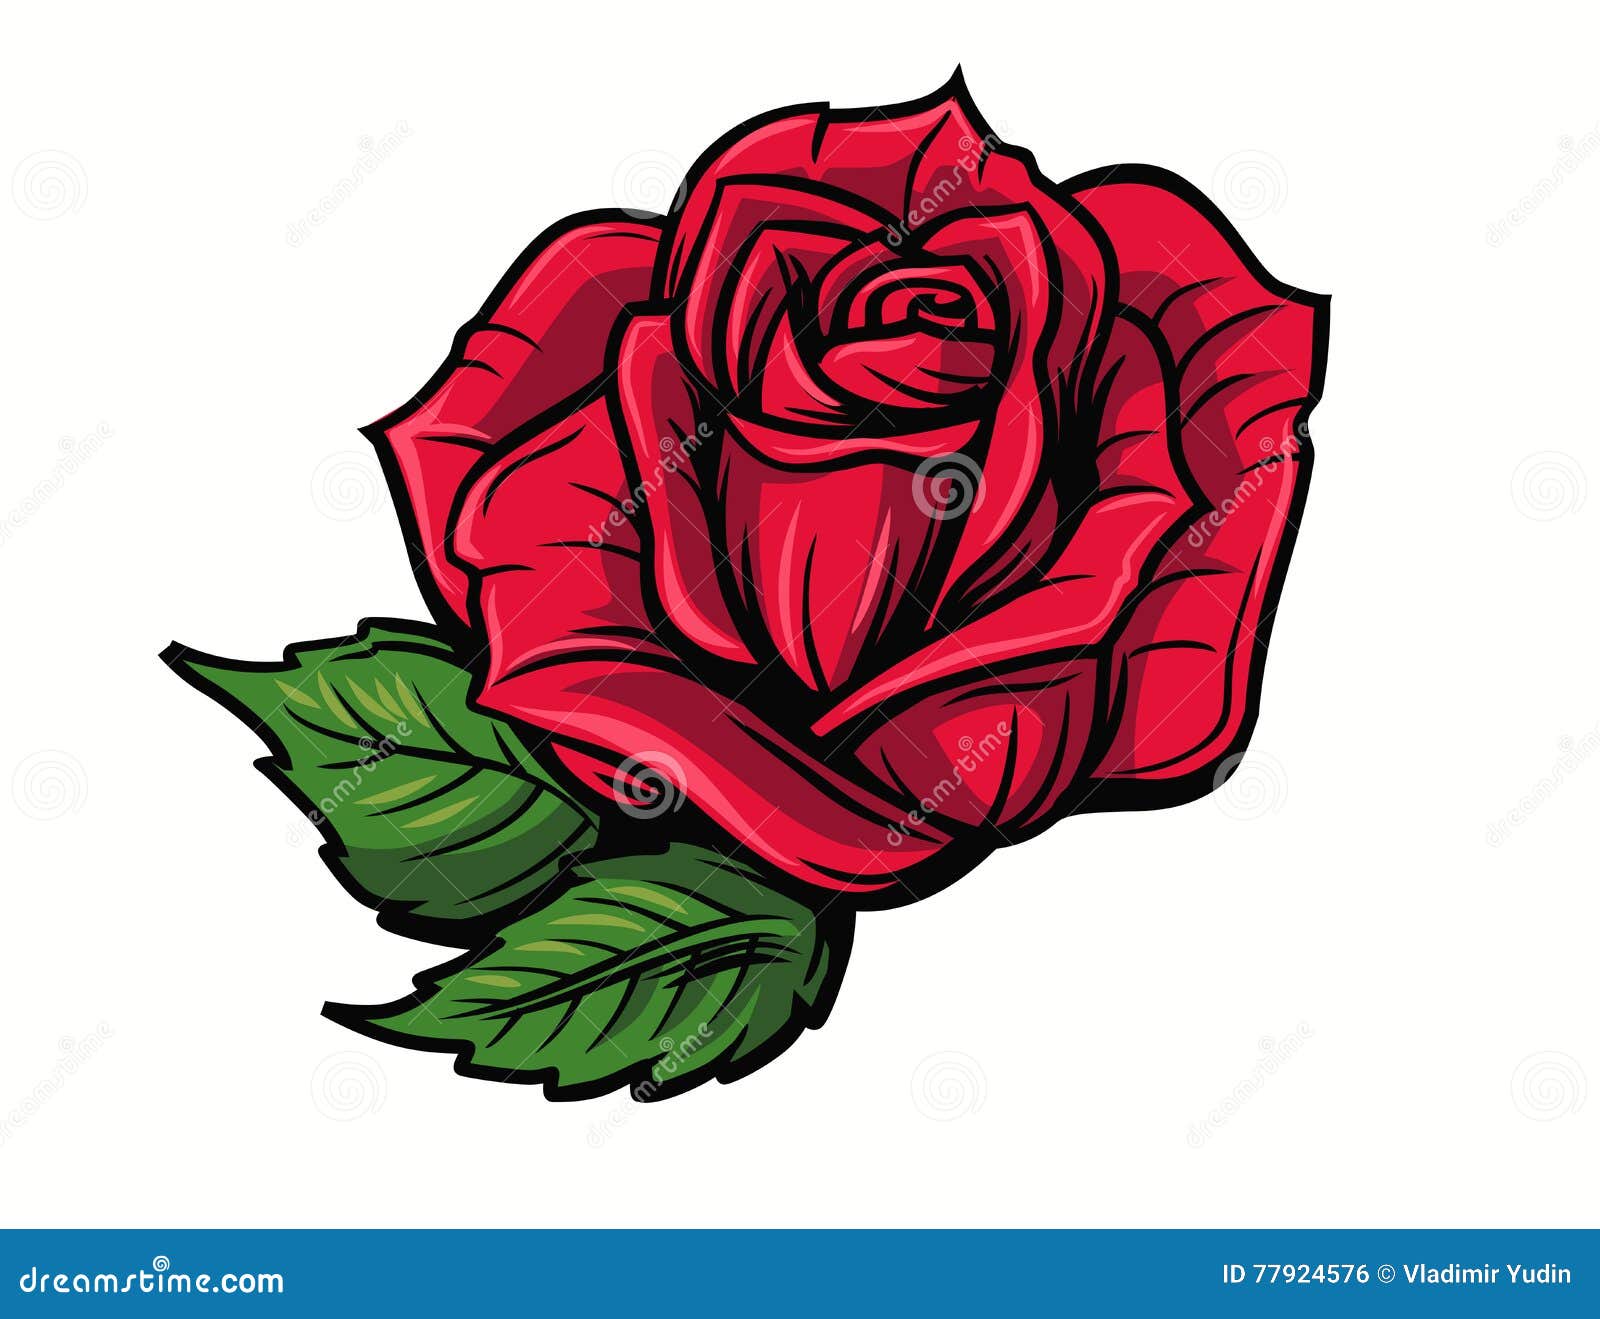 red rose cartoon